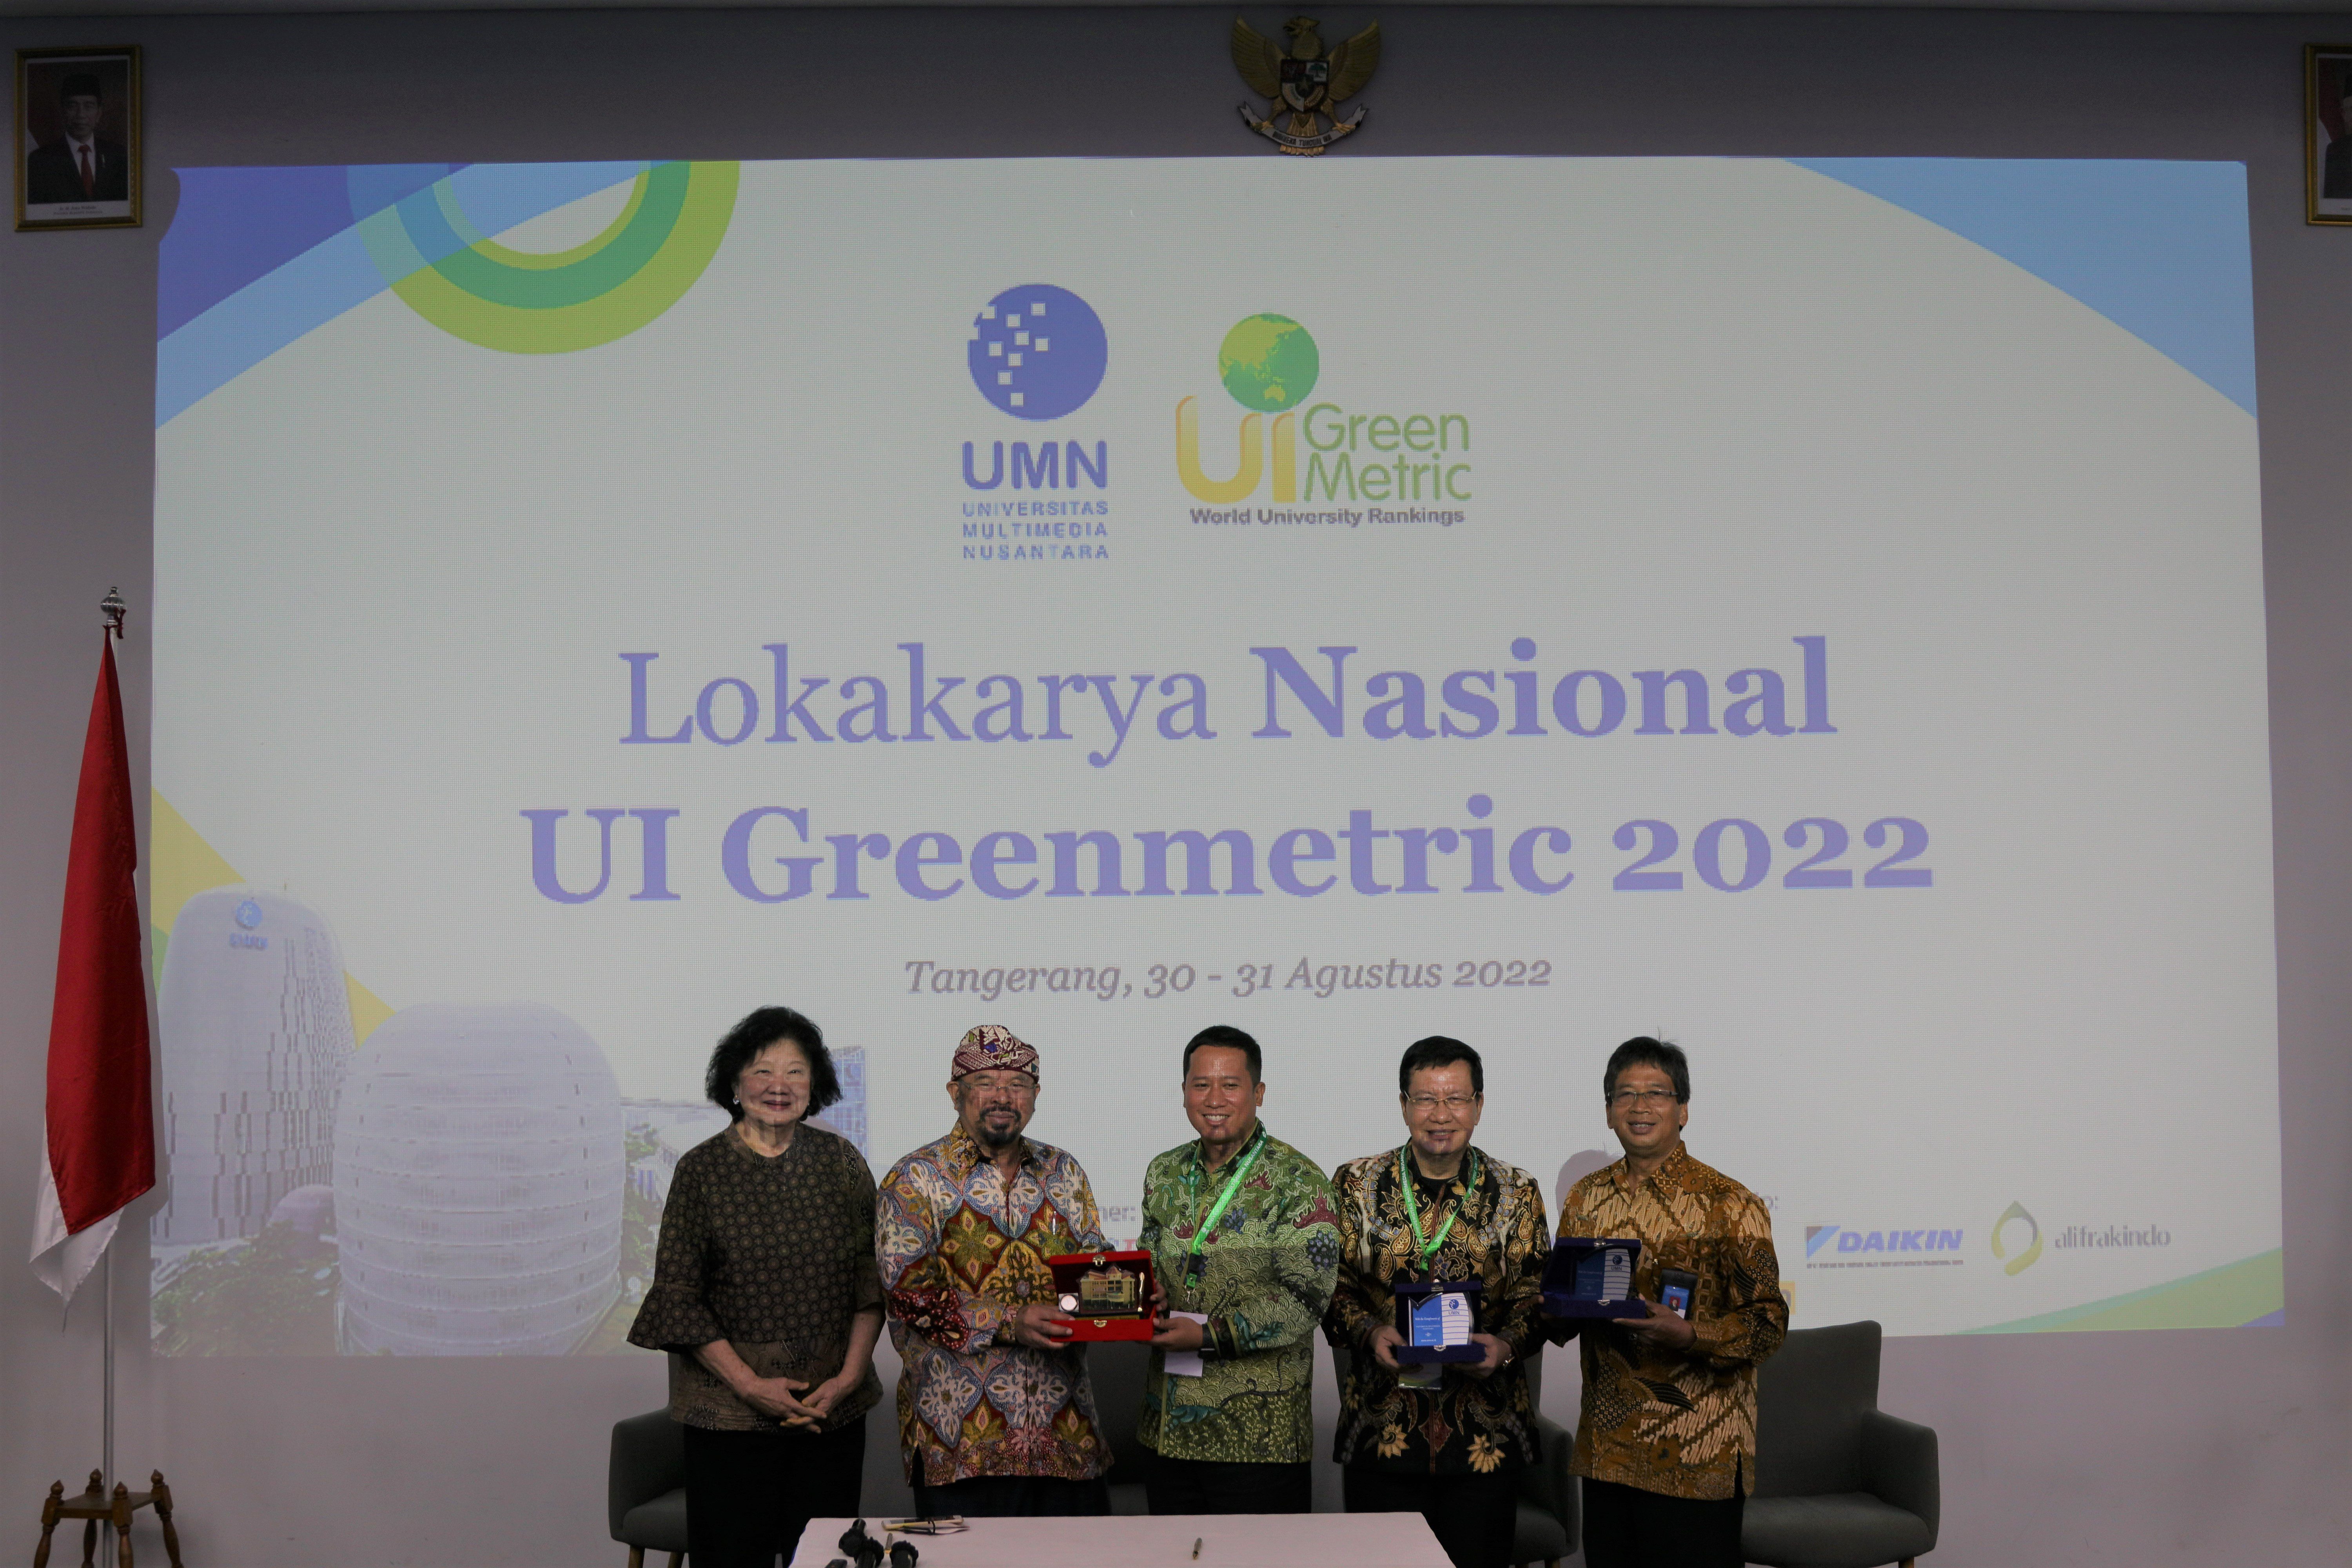 Focusing On Sustainability, Umn Hosts The Ui Greenmetric National Workshop  2022 | Universitas Multimedia Nusantara